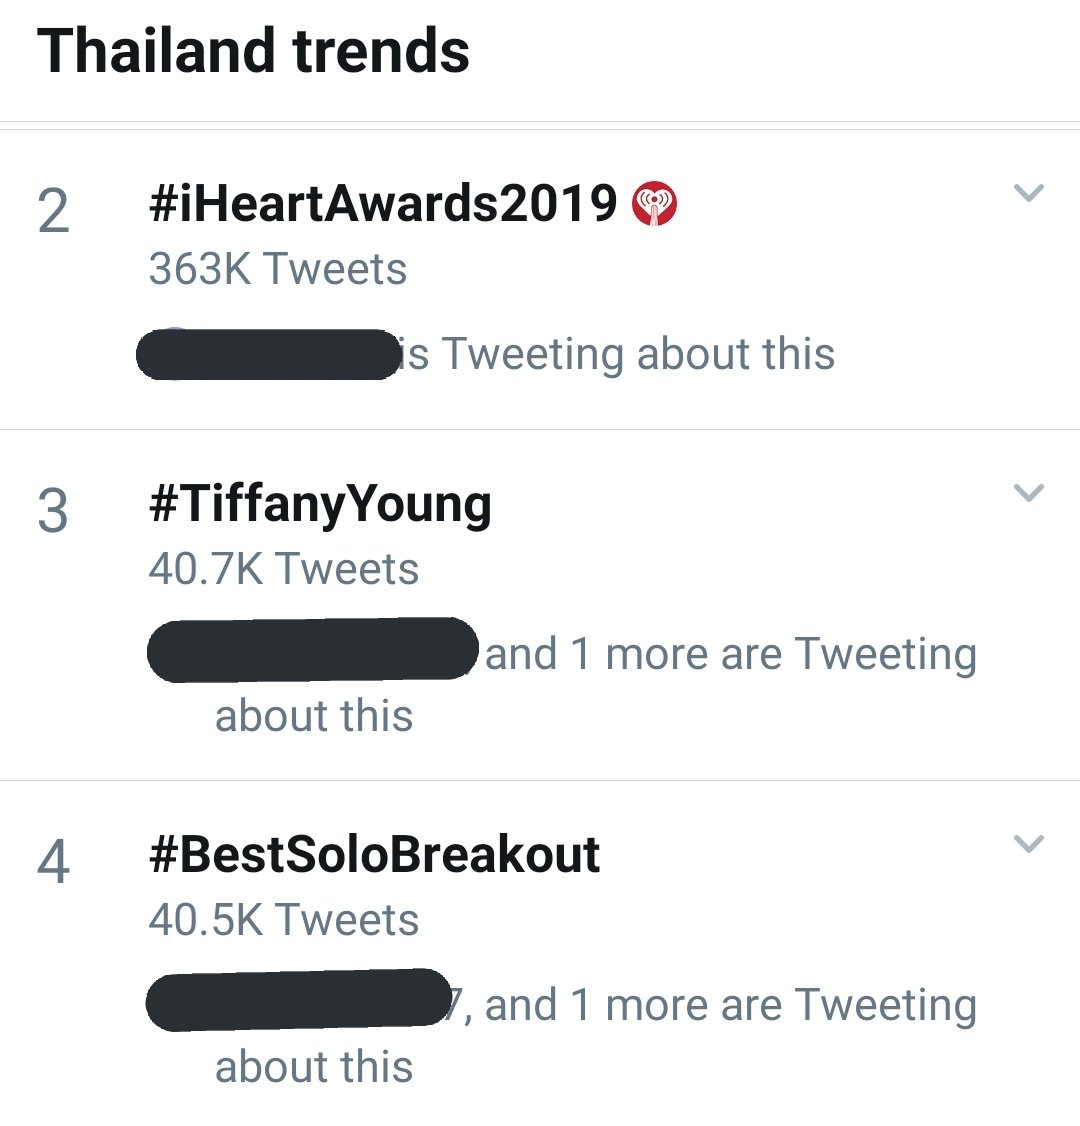 Thailand Trends
2. #IHEARTAWARDS2019
3. #TiffanyYoung
4. #BestSoloBreakout
@tiffanyyoung